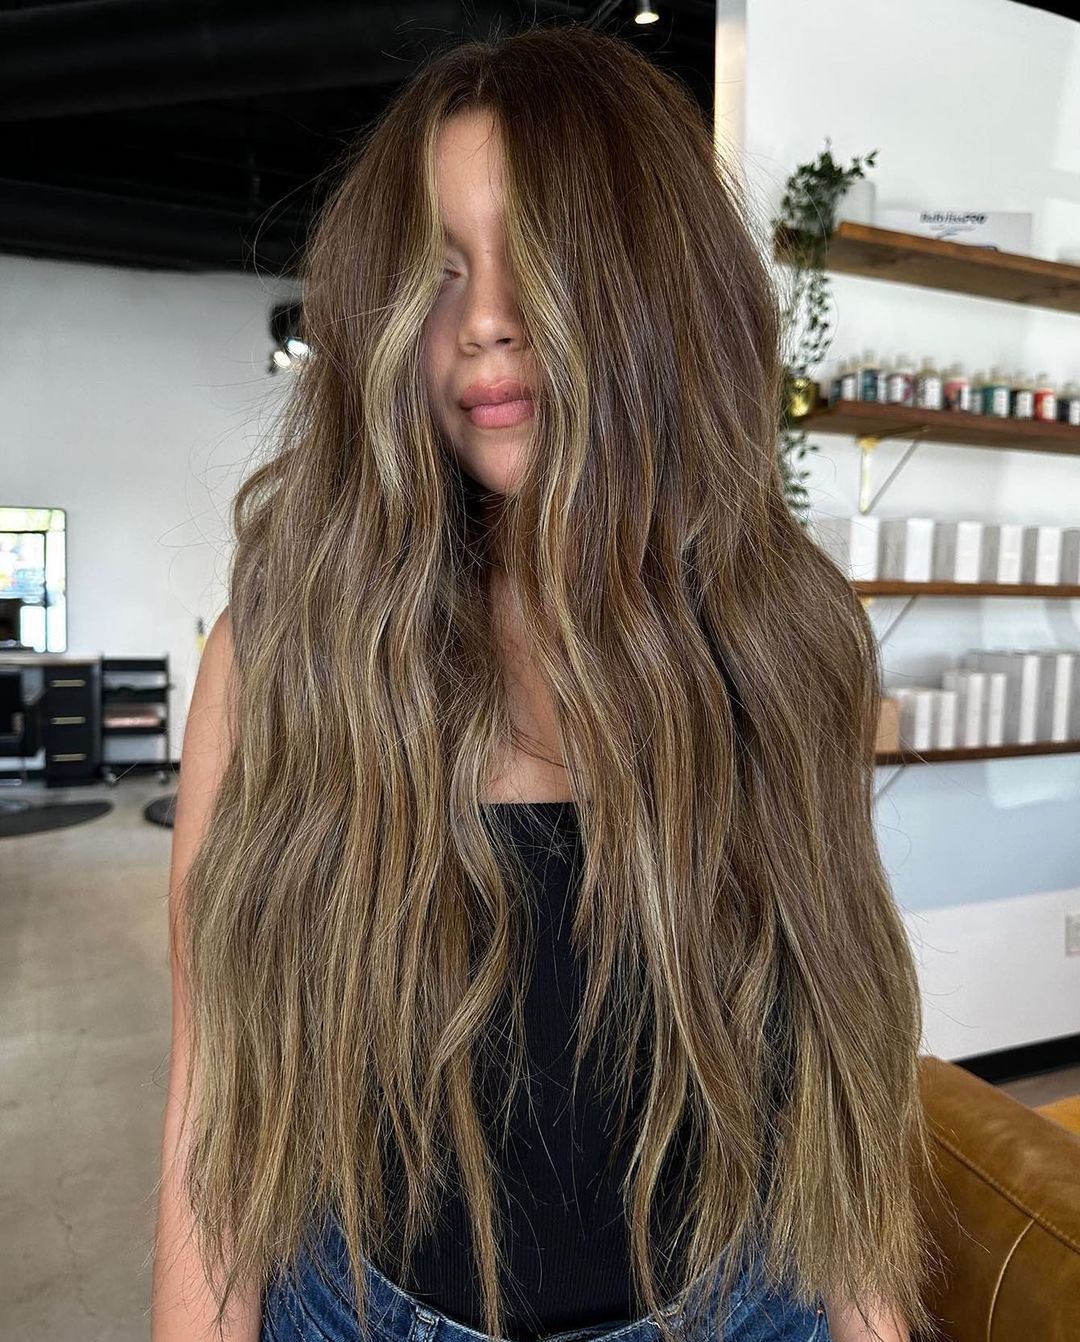 Girl with long bronde hair